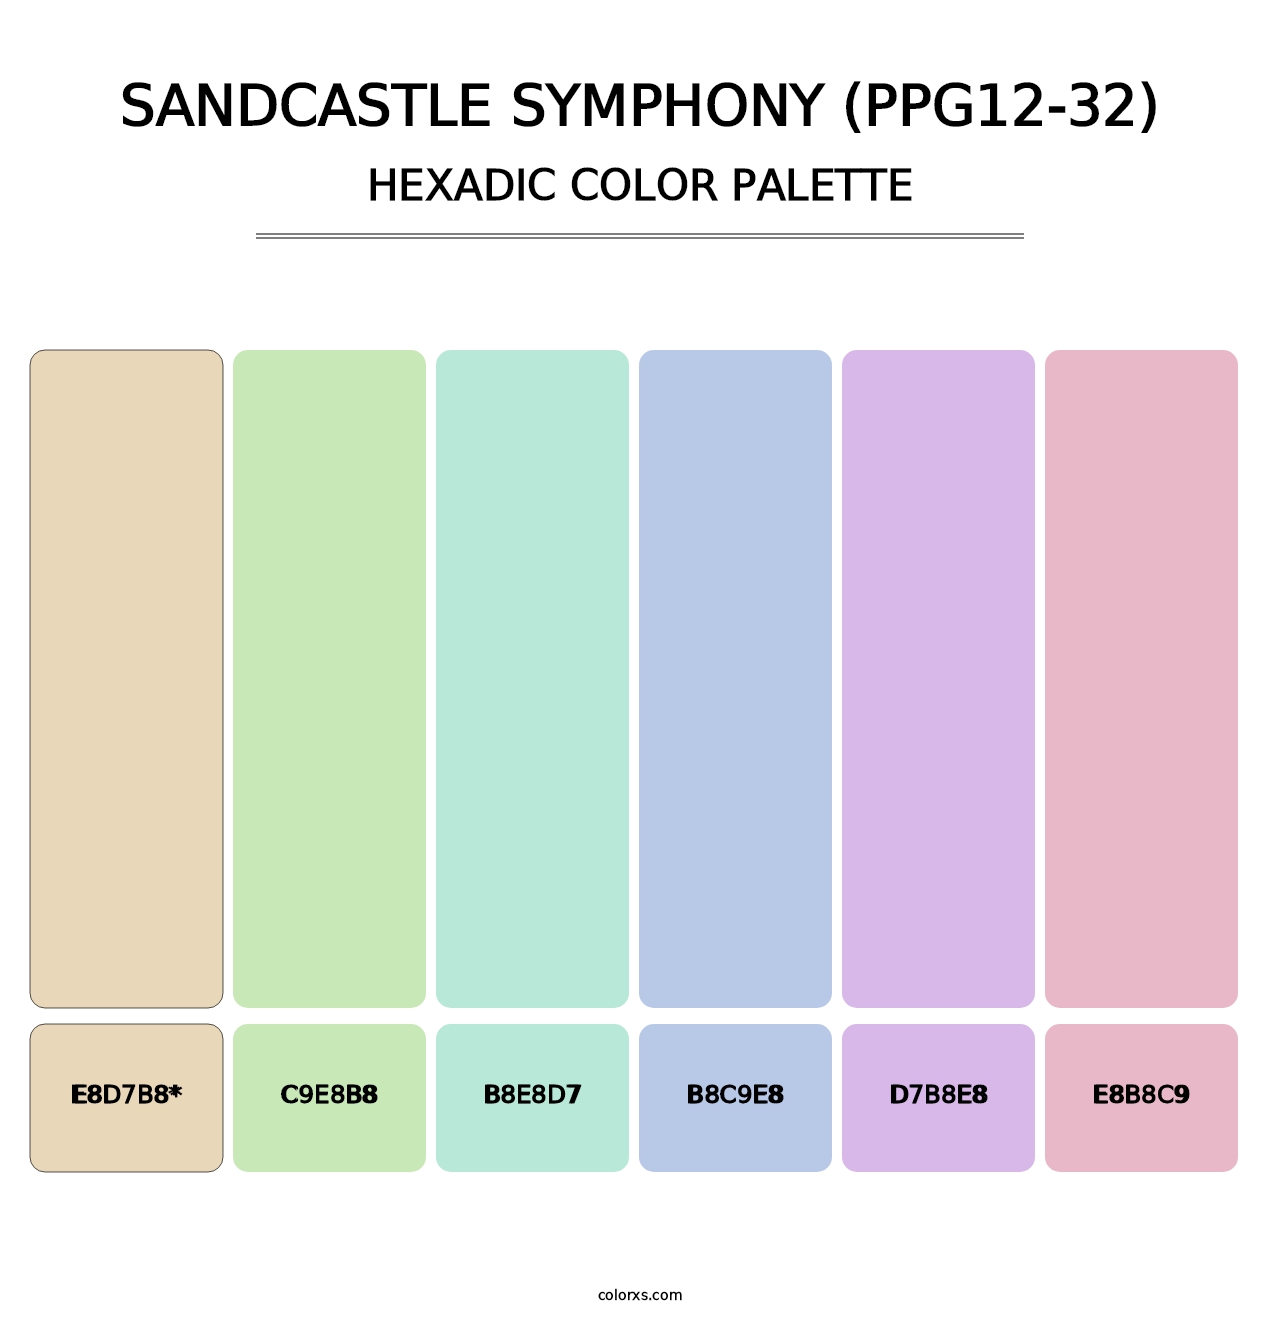 Sandcastle Symphony (PPG12-32) - Hexadic Color Palette